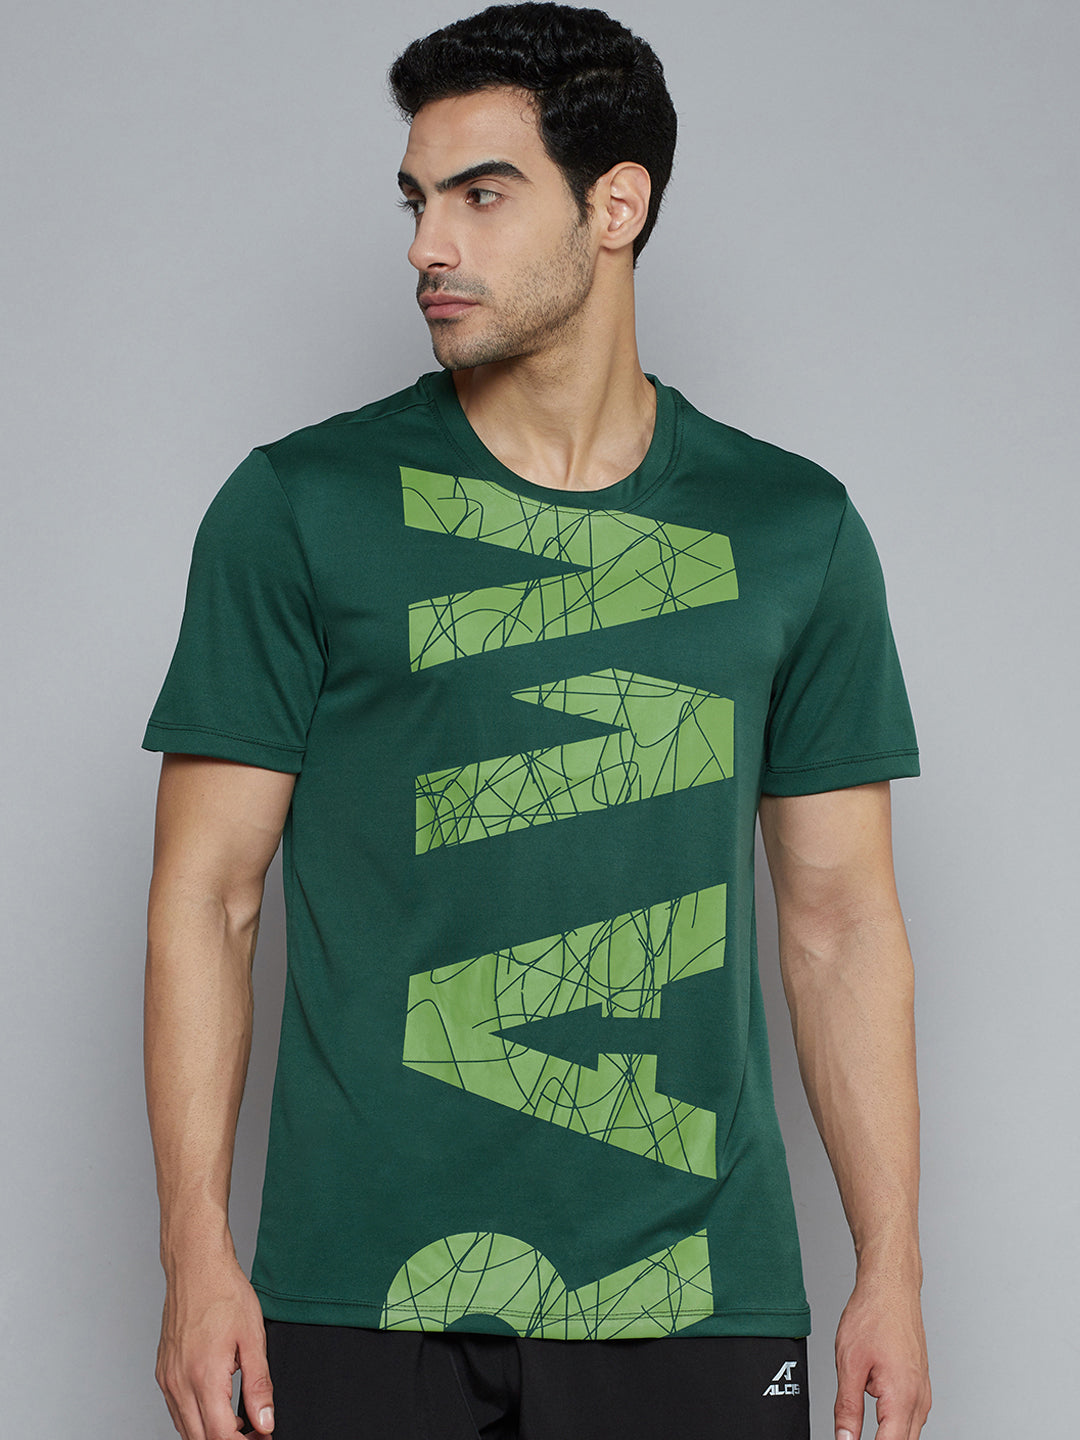 Alcis Men Green Typography Printed Slim Fit T-shirt